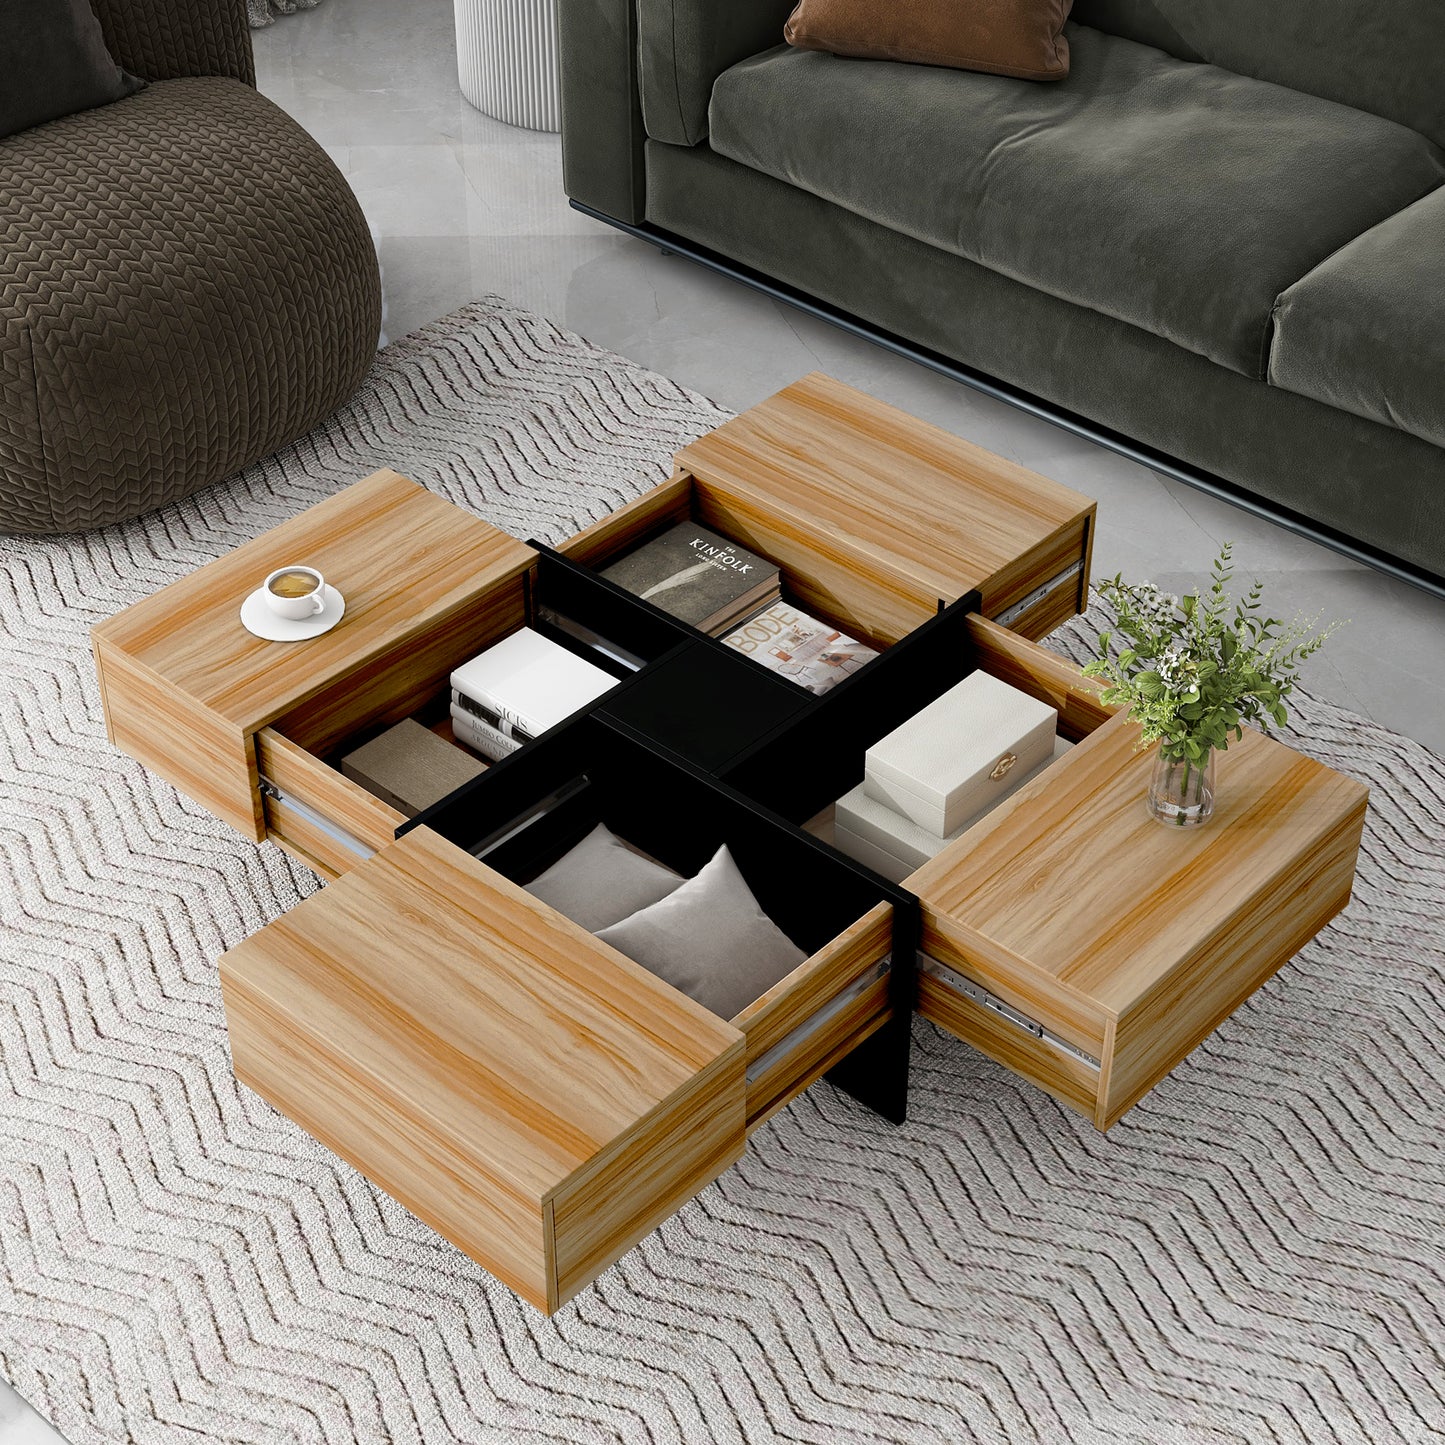 Unique Design Coffee Table with 4 Hidden Storage Compartments